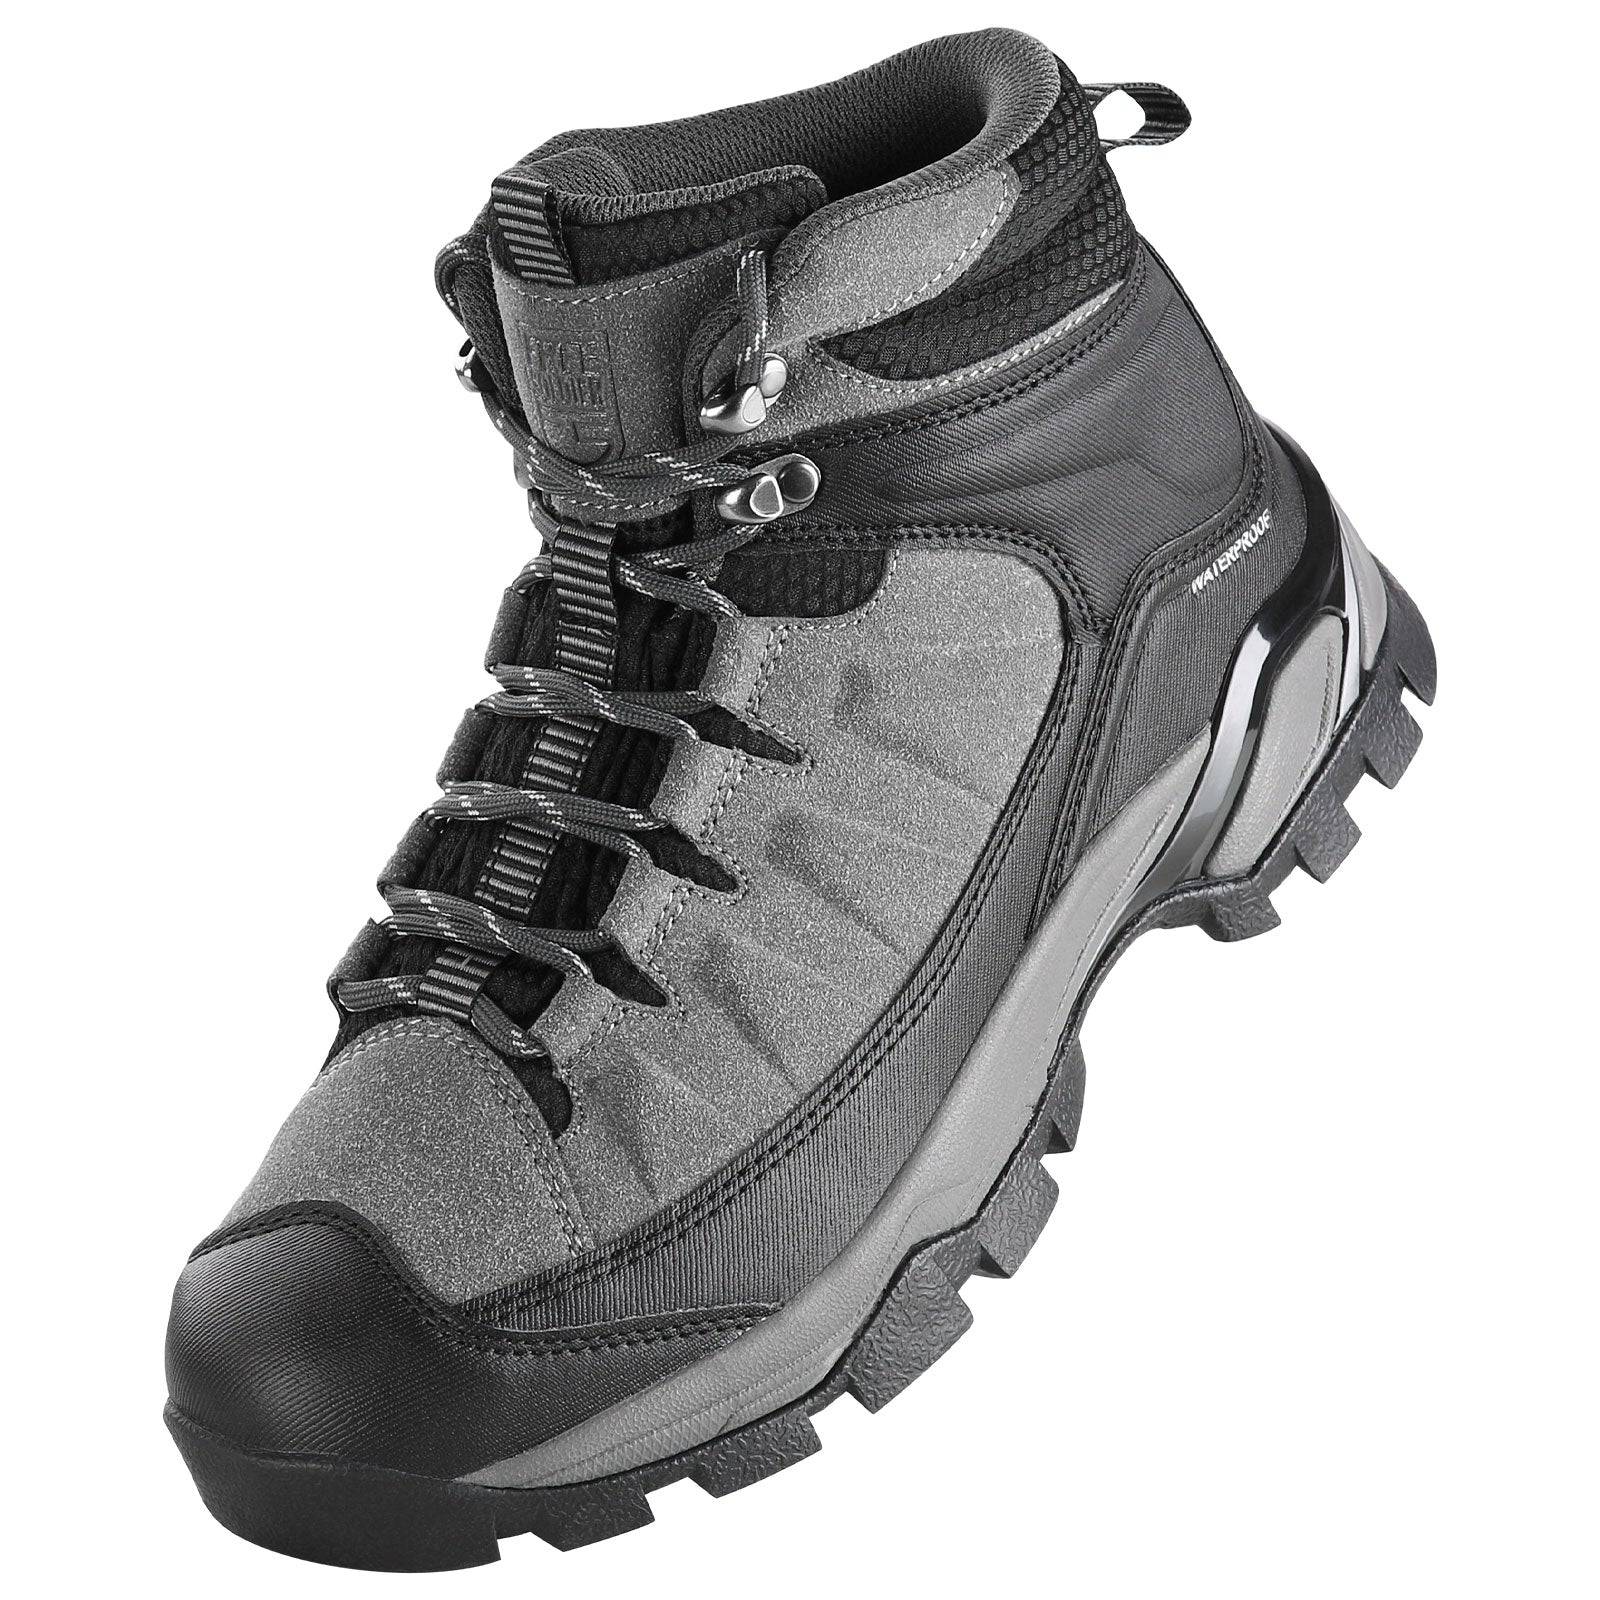 4.6" Men’s Lightweight Waterproof Hiking Boots